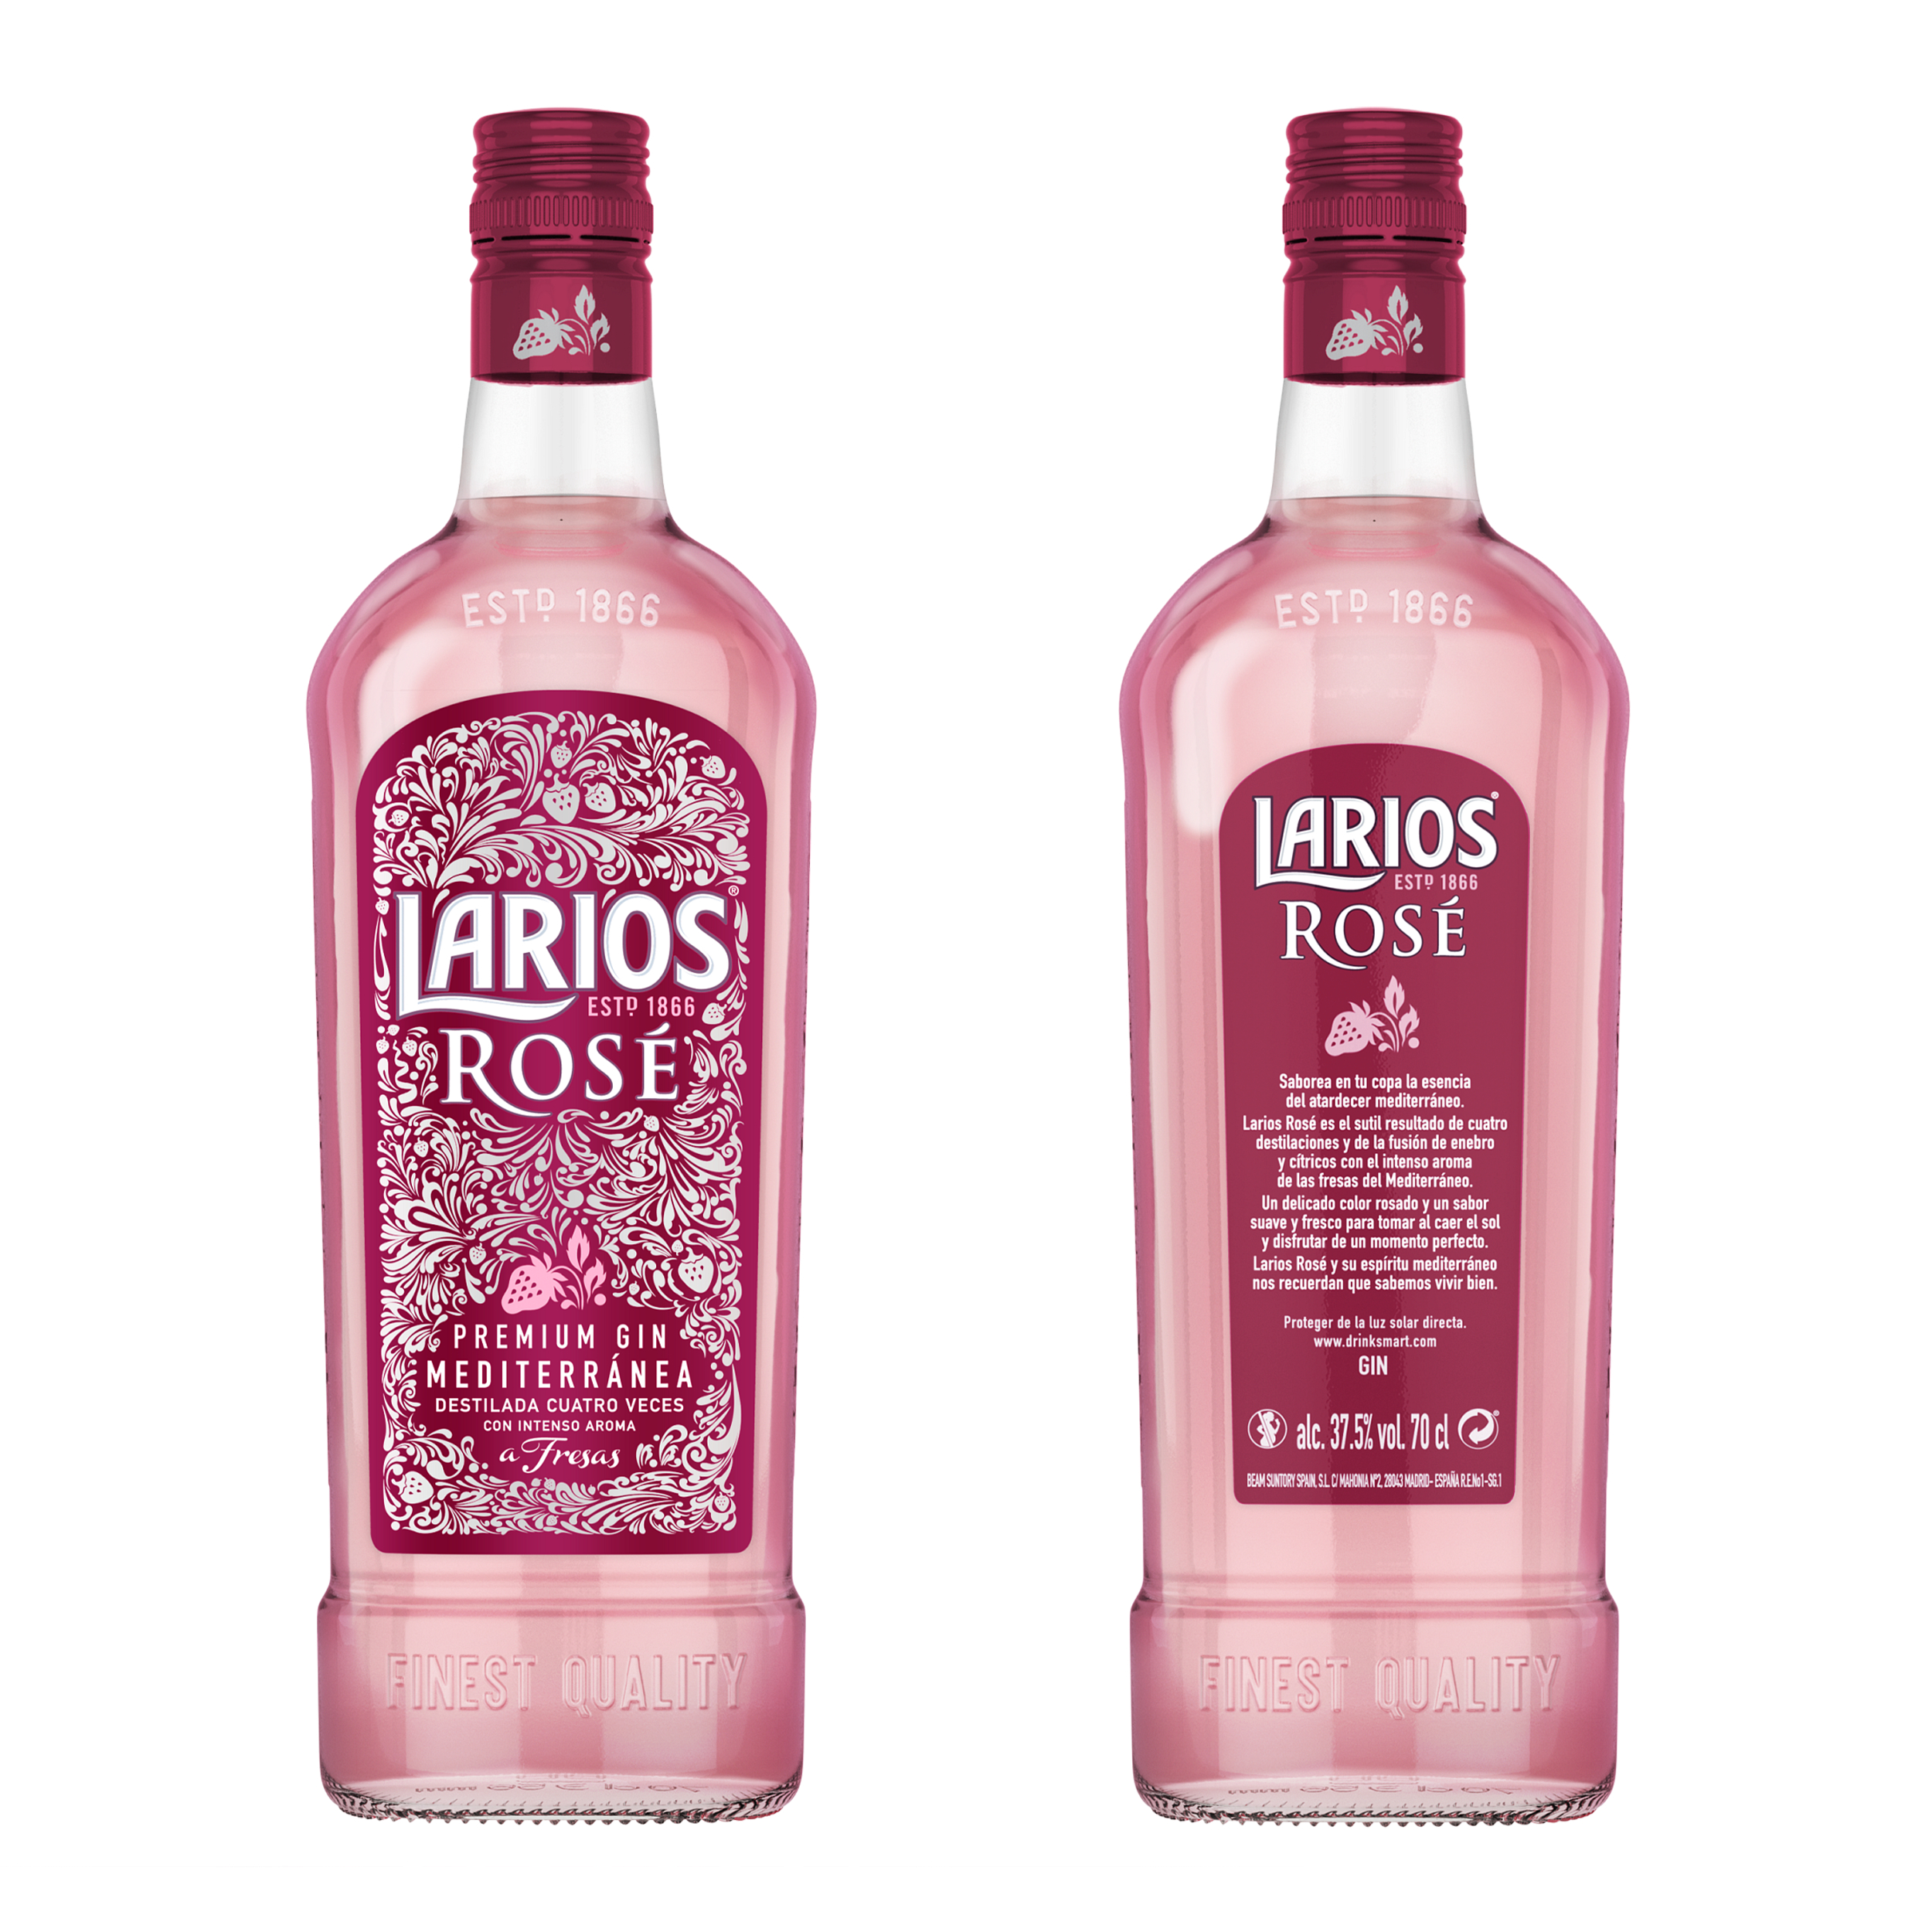 Джин Larios Rose Premium Gin, 37,5%, 0,7 л + бокал - фото 4